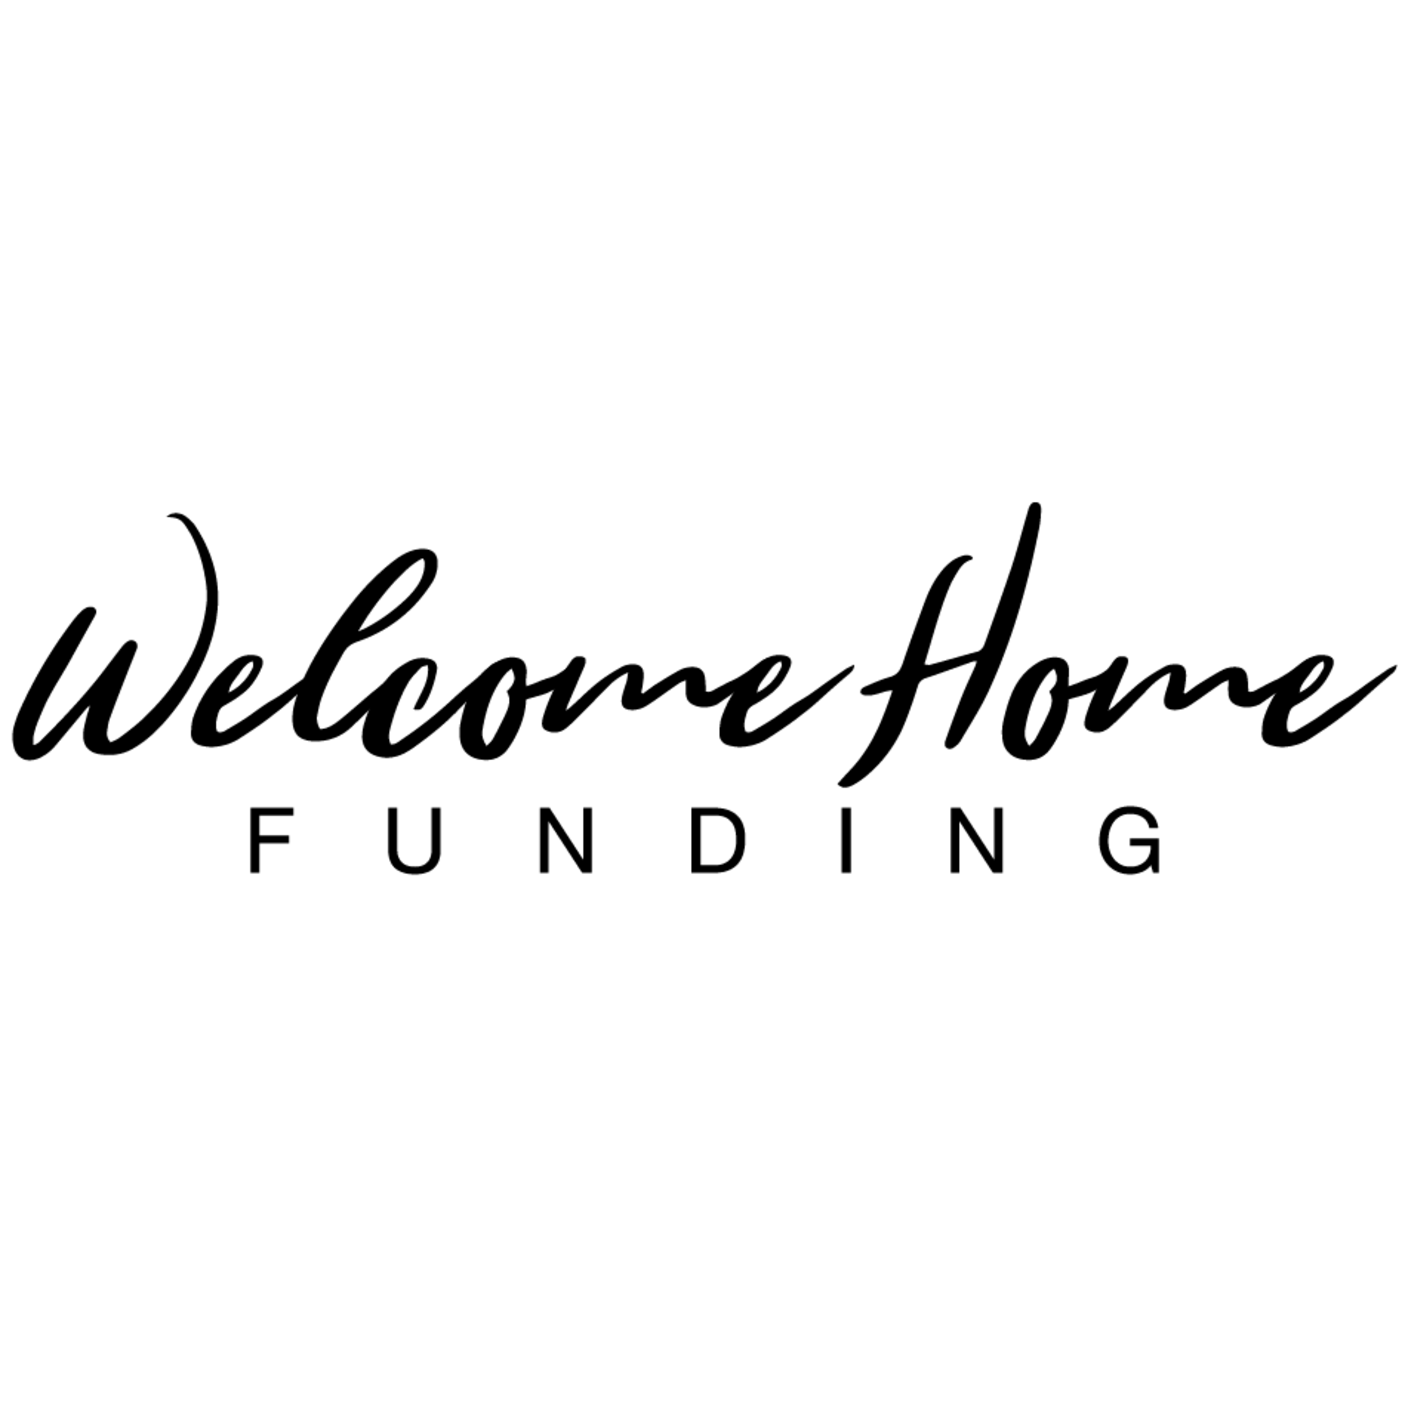 Heather Headley | Welcome Home Funding, LLC Logo